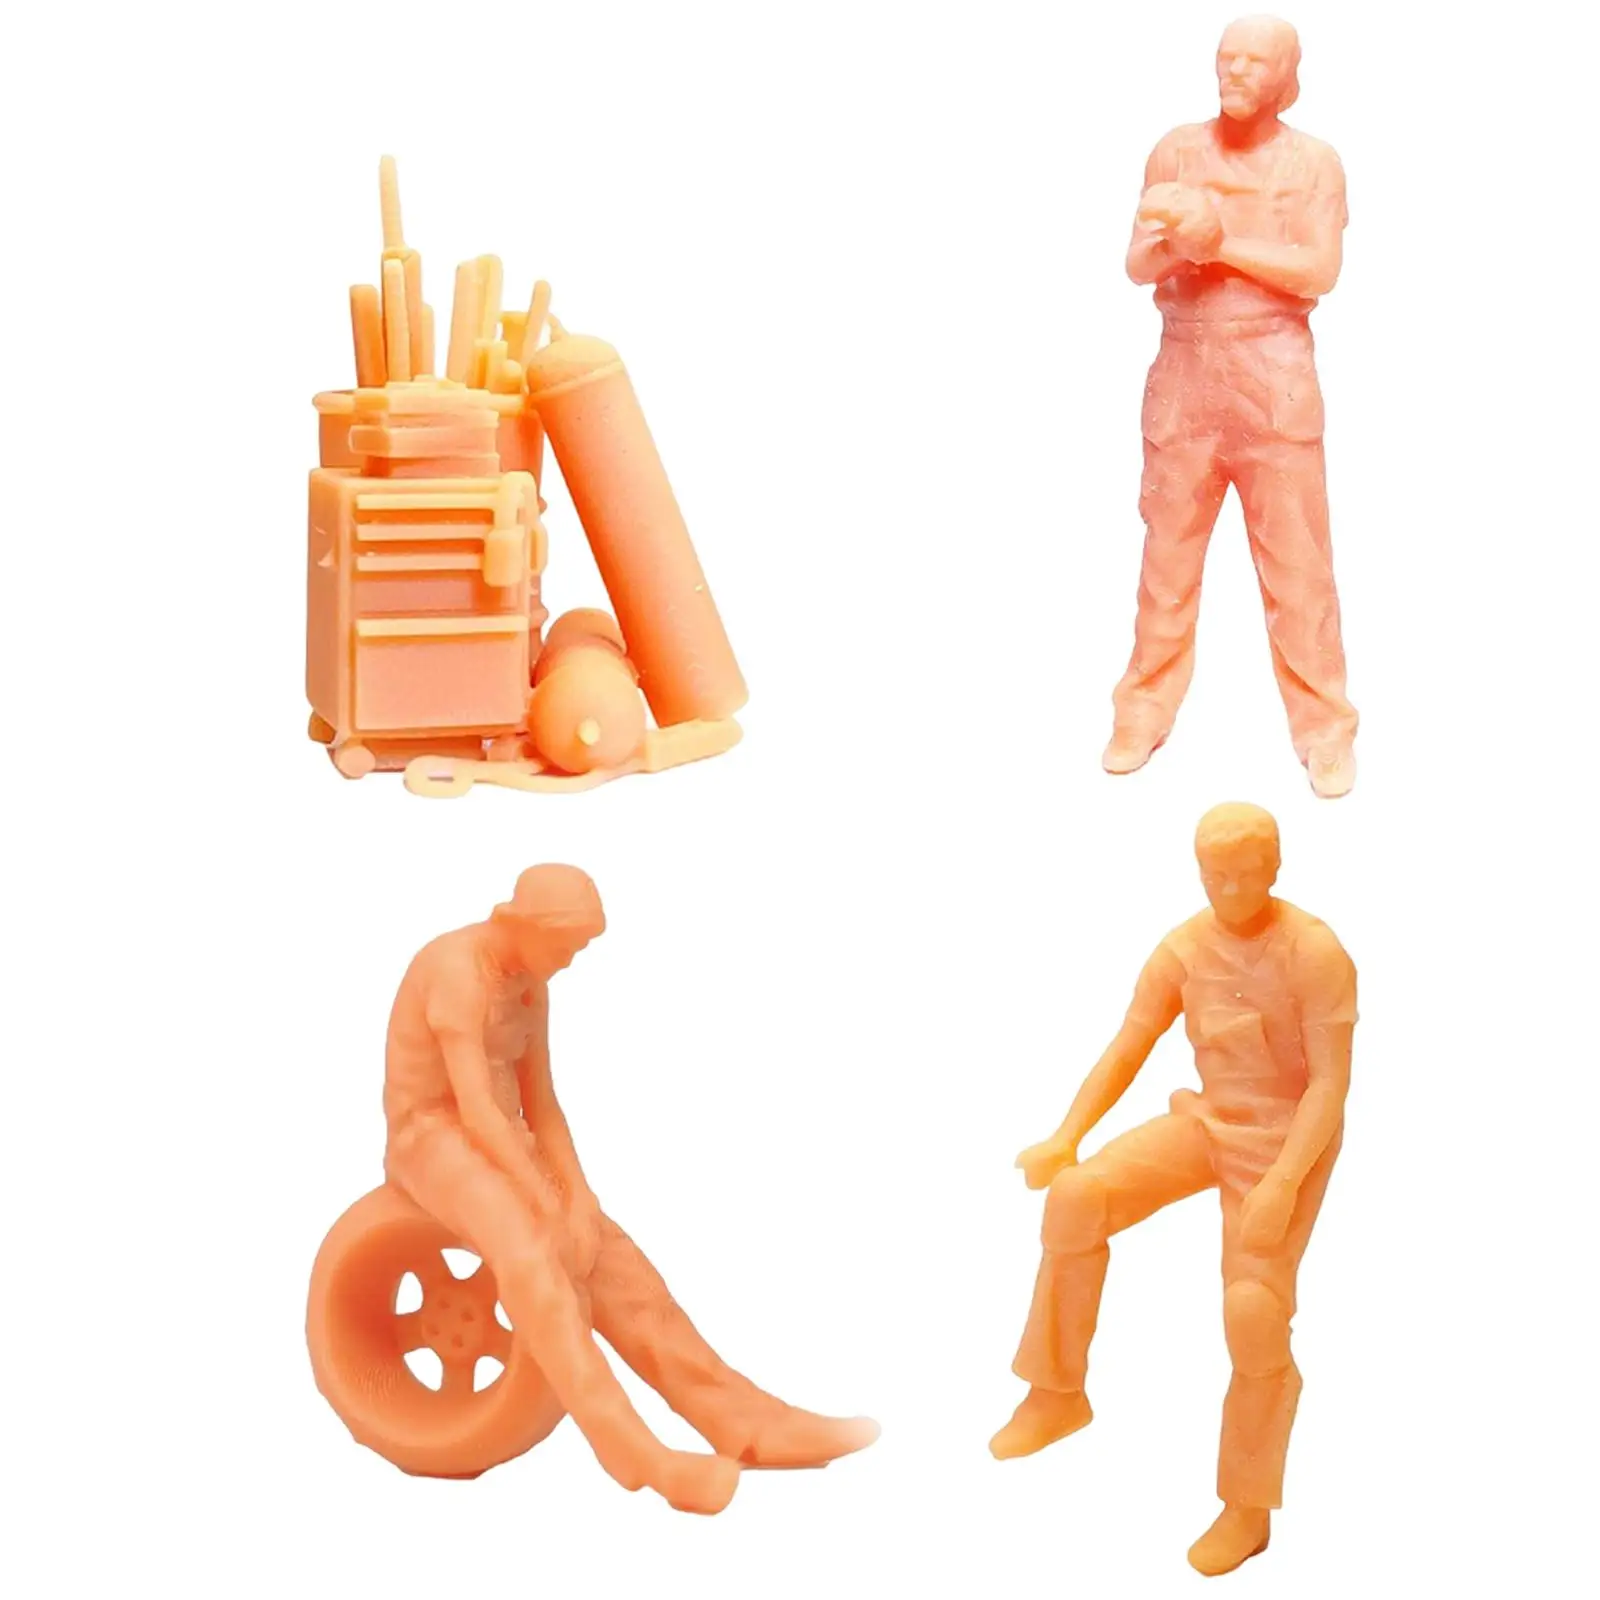 Resin 1/64 Miniature People Figurines Motorcyclist Garage Scenes Accessories